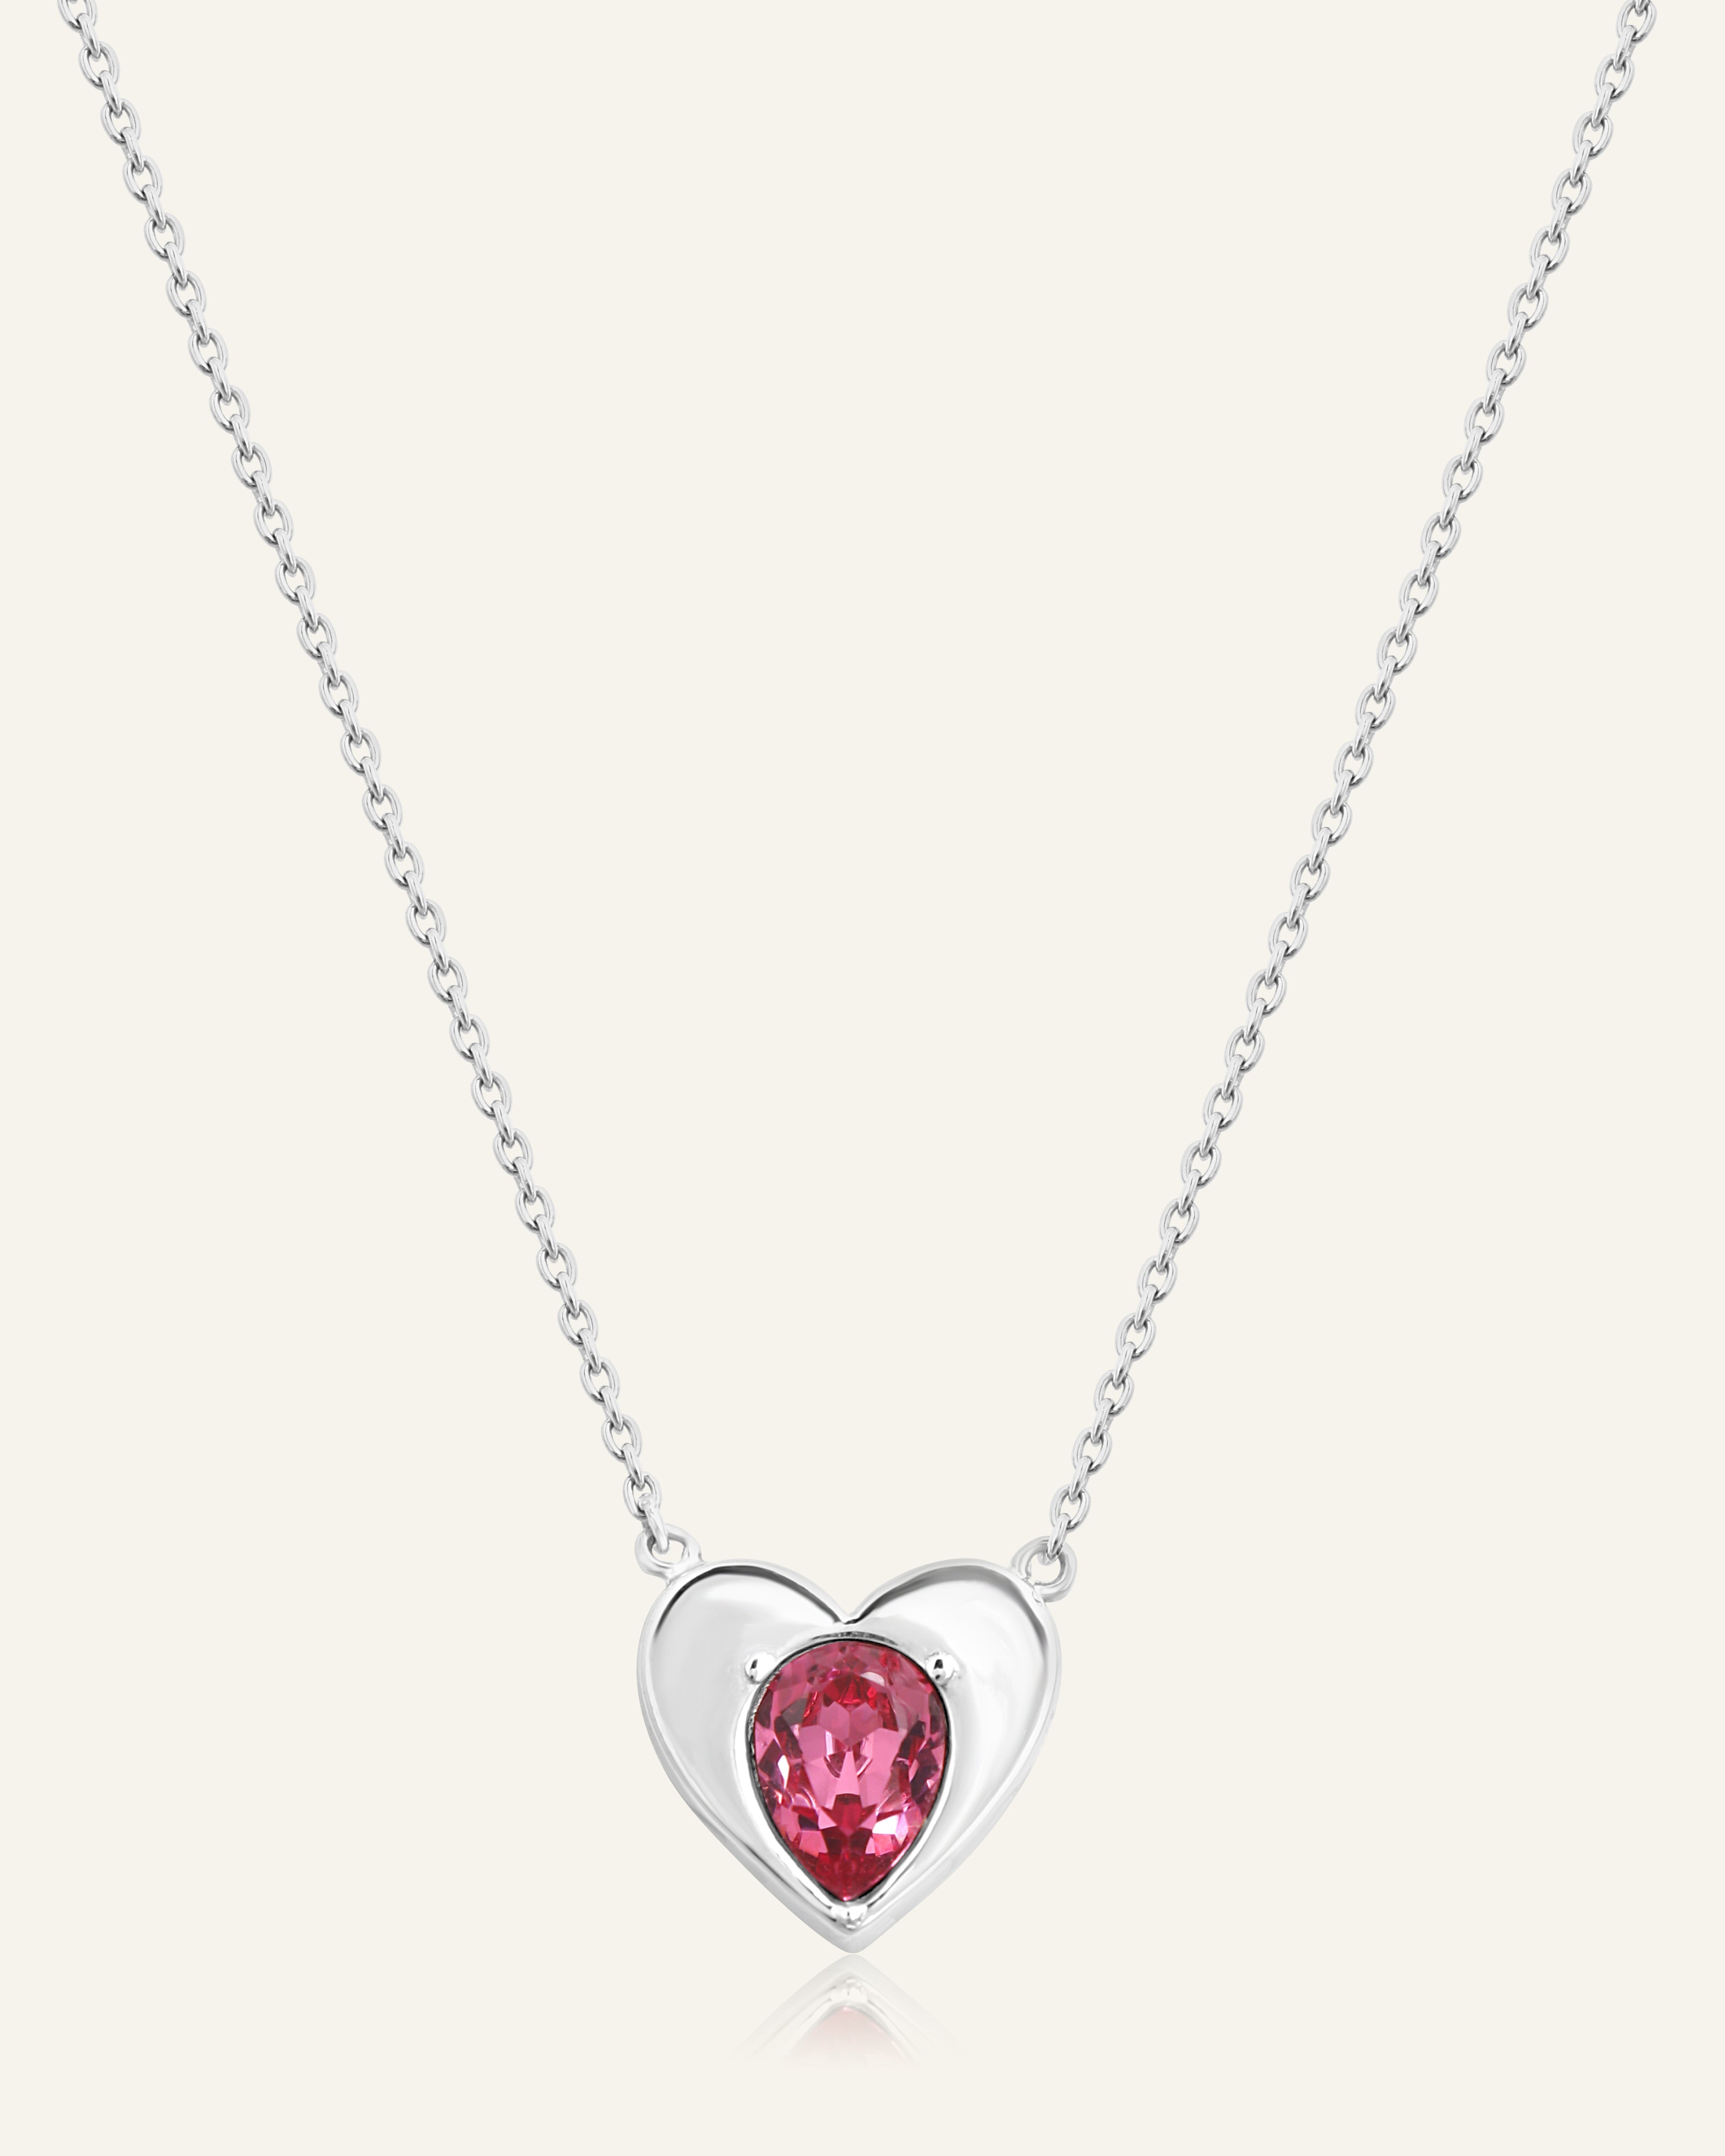 Pink Swarovski Crystals Heart Necklace